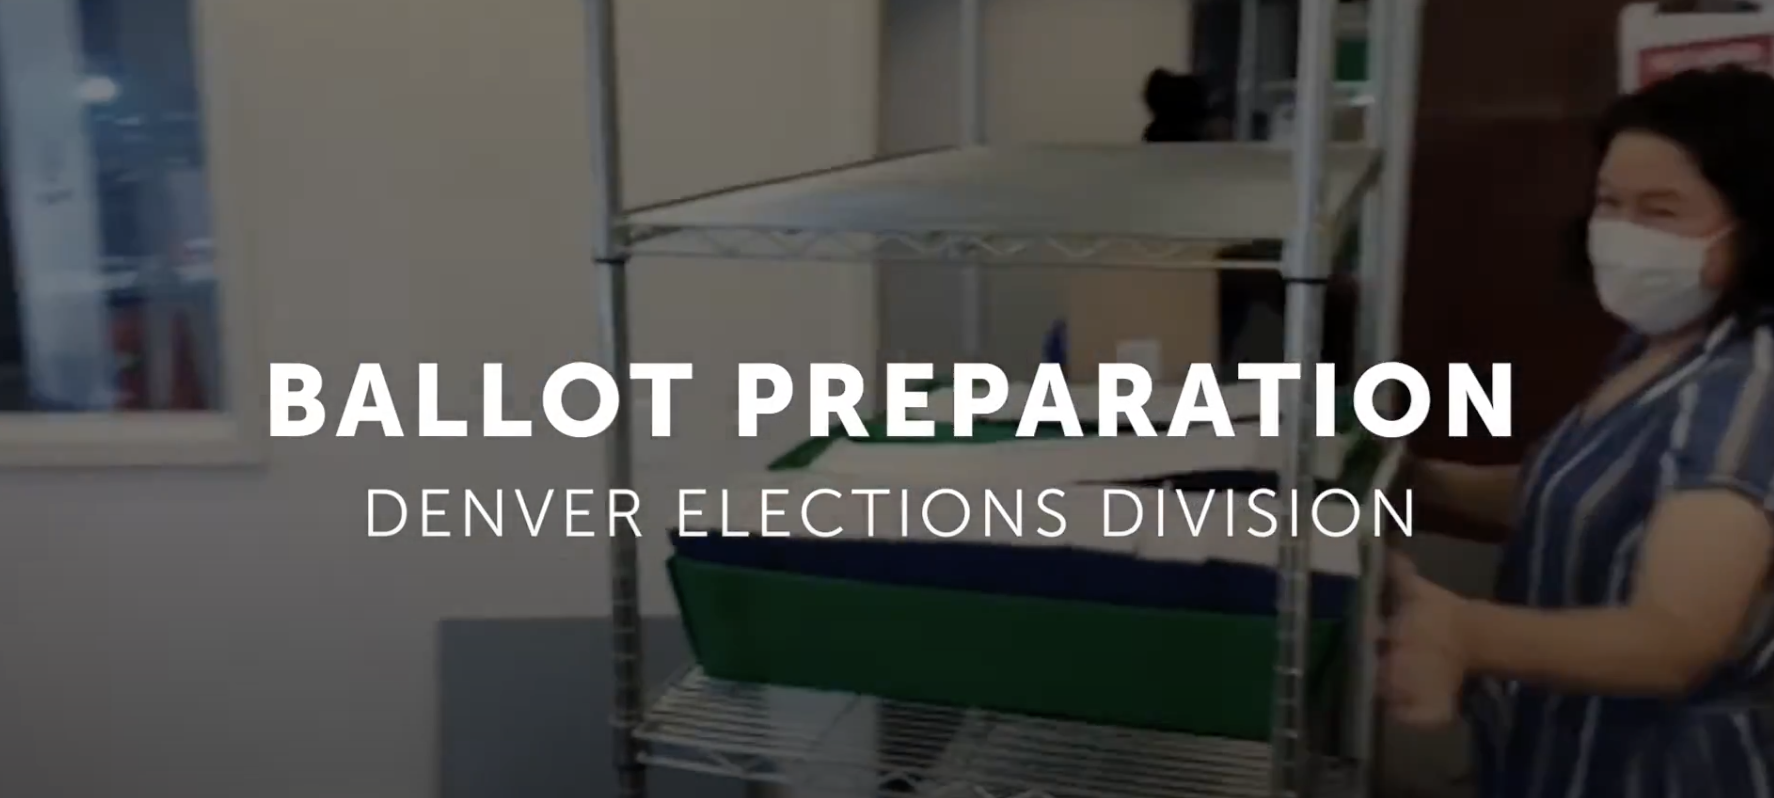 Ballot Preparation by Denver Elections Division